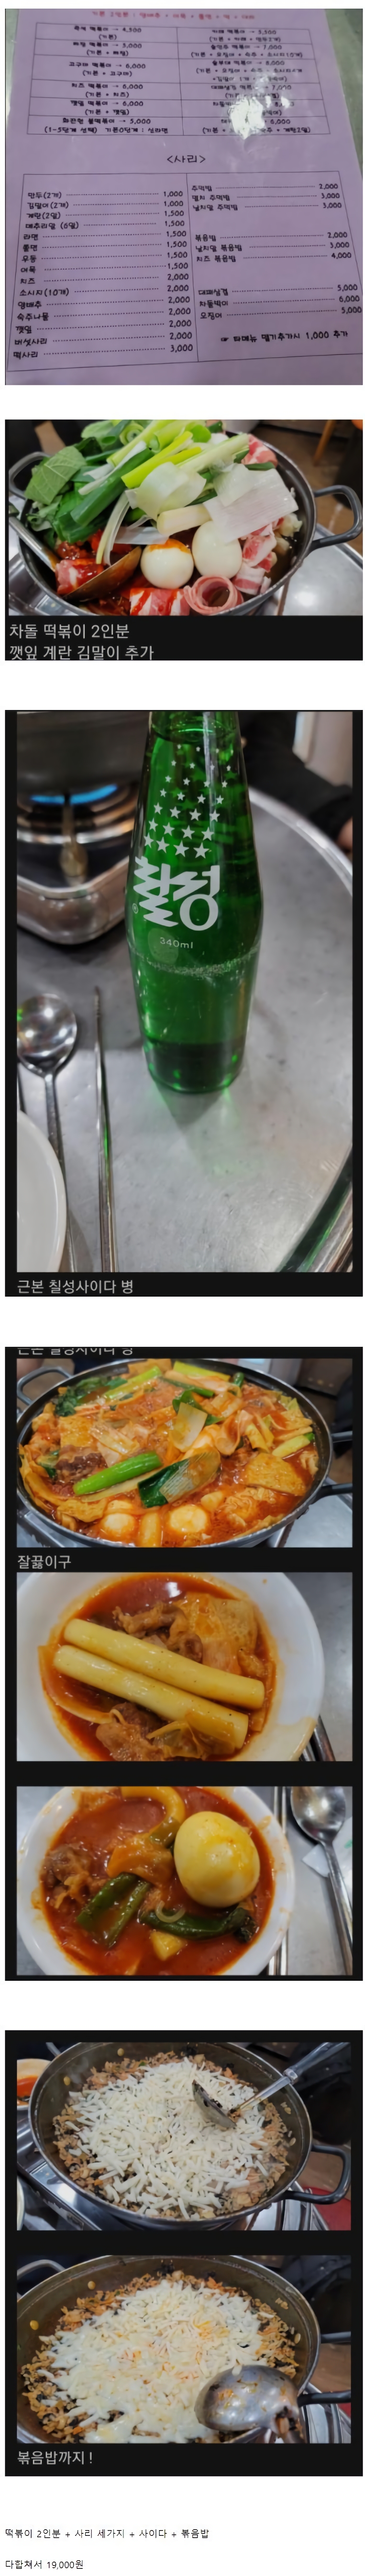 19,000 won instant tteokbokki. 2 servings of tteokbokki. Jpg.